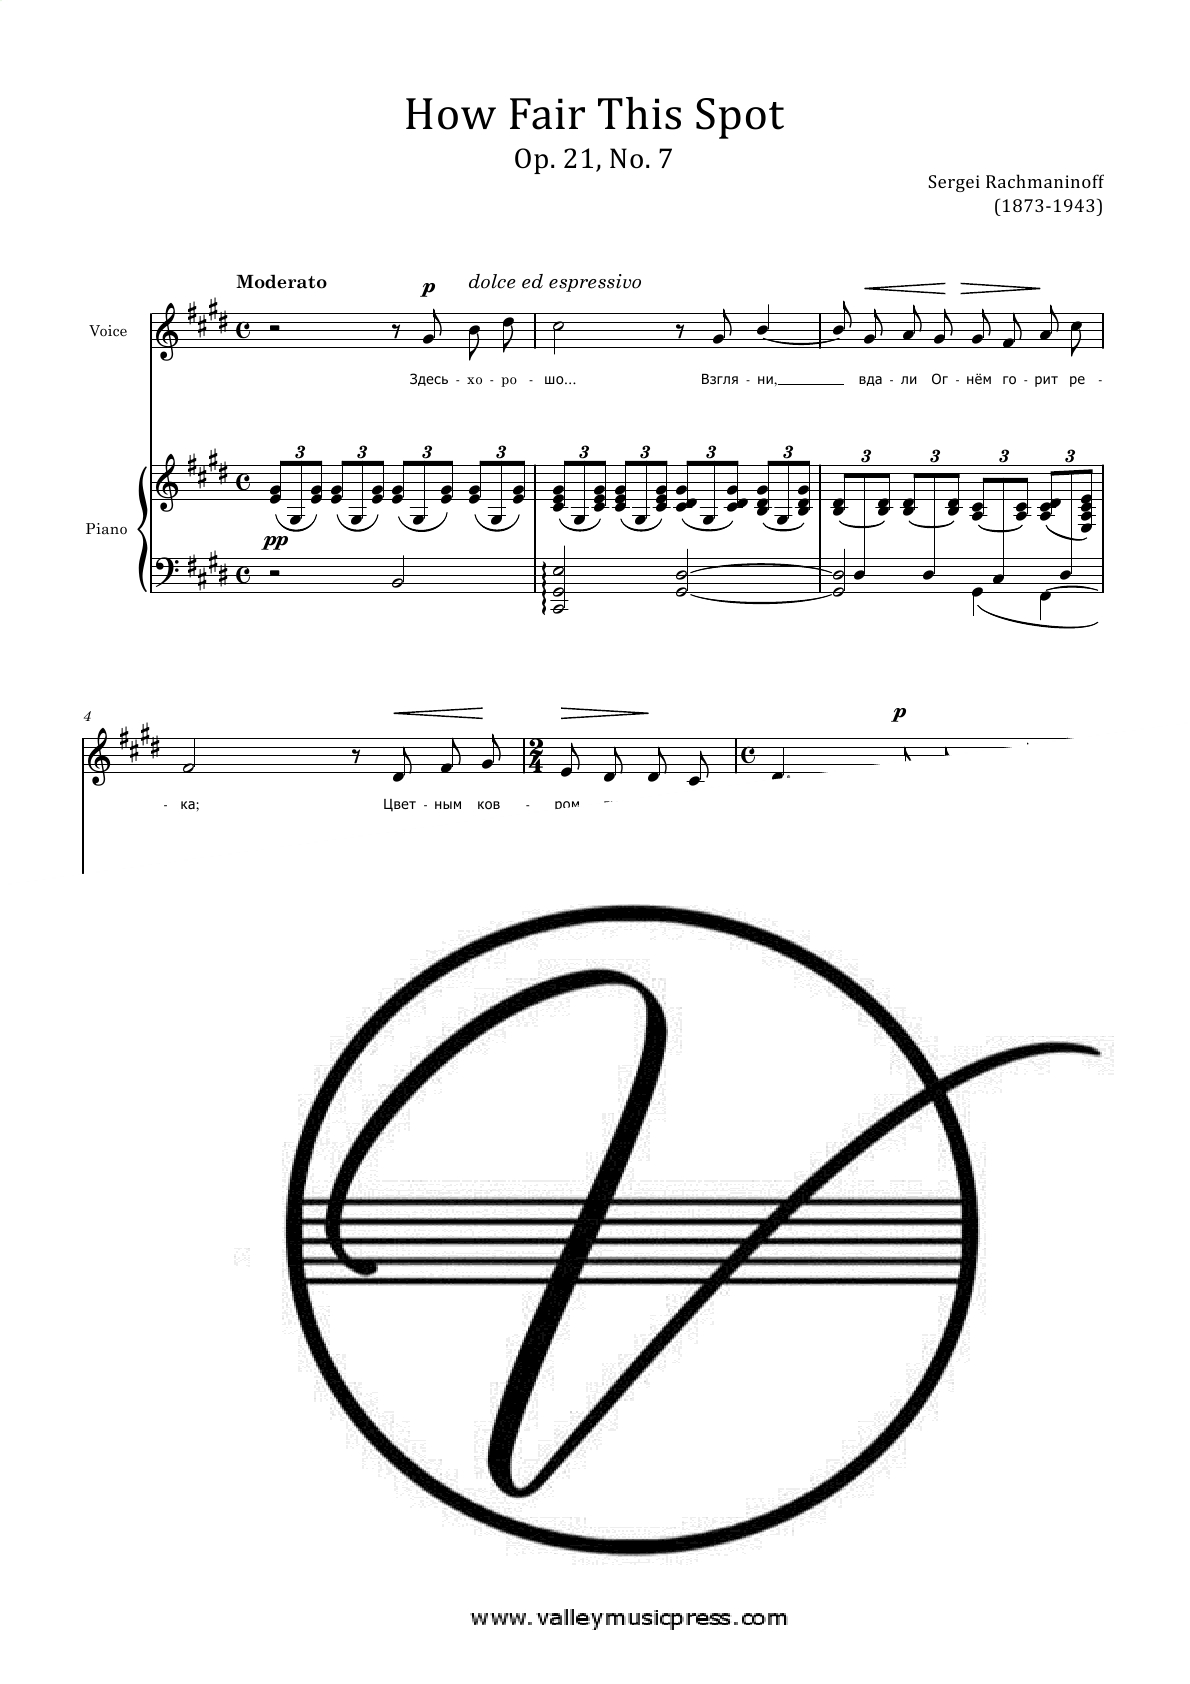 Rachmaninoff - How Fair This Spot Op. 21 No. 7 (Voice)